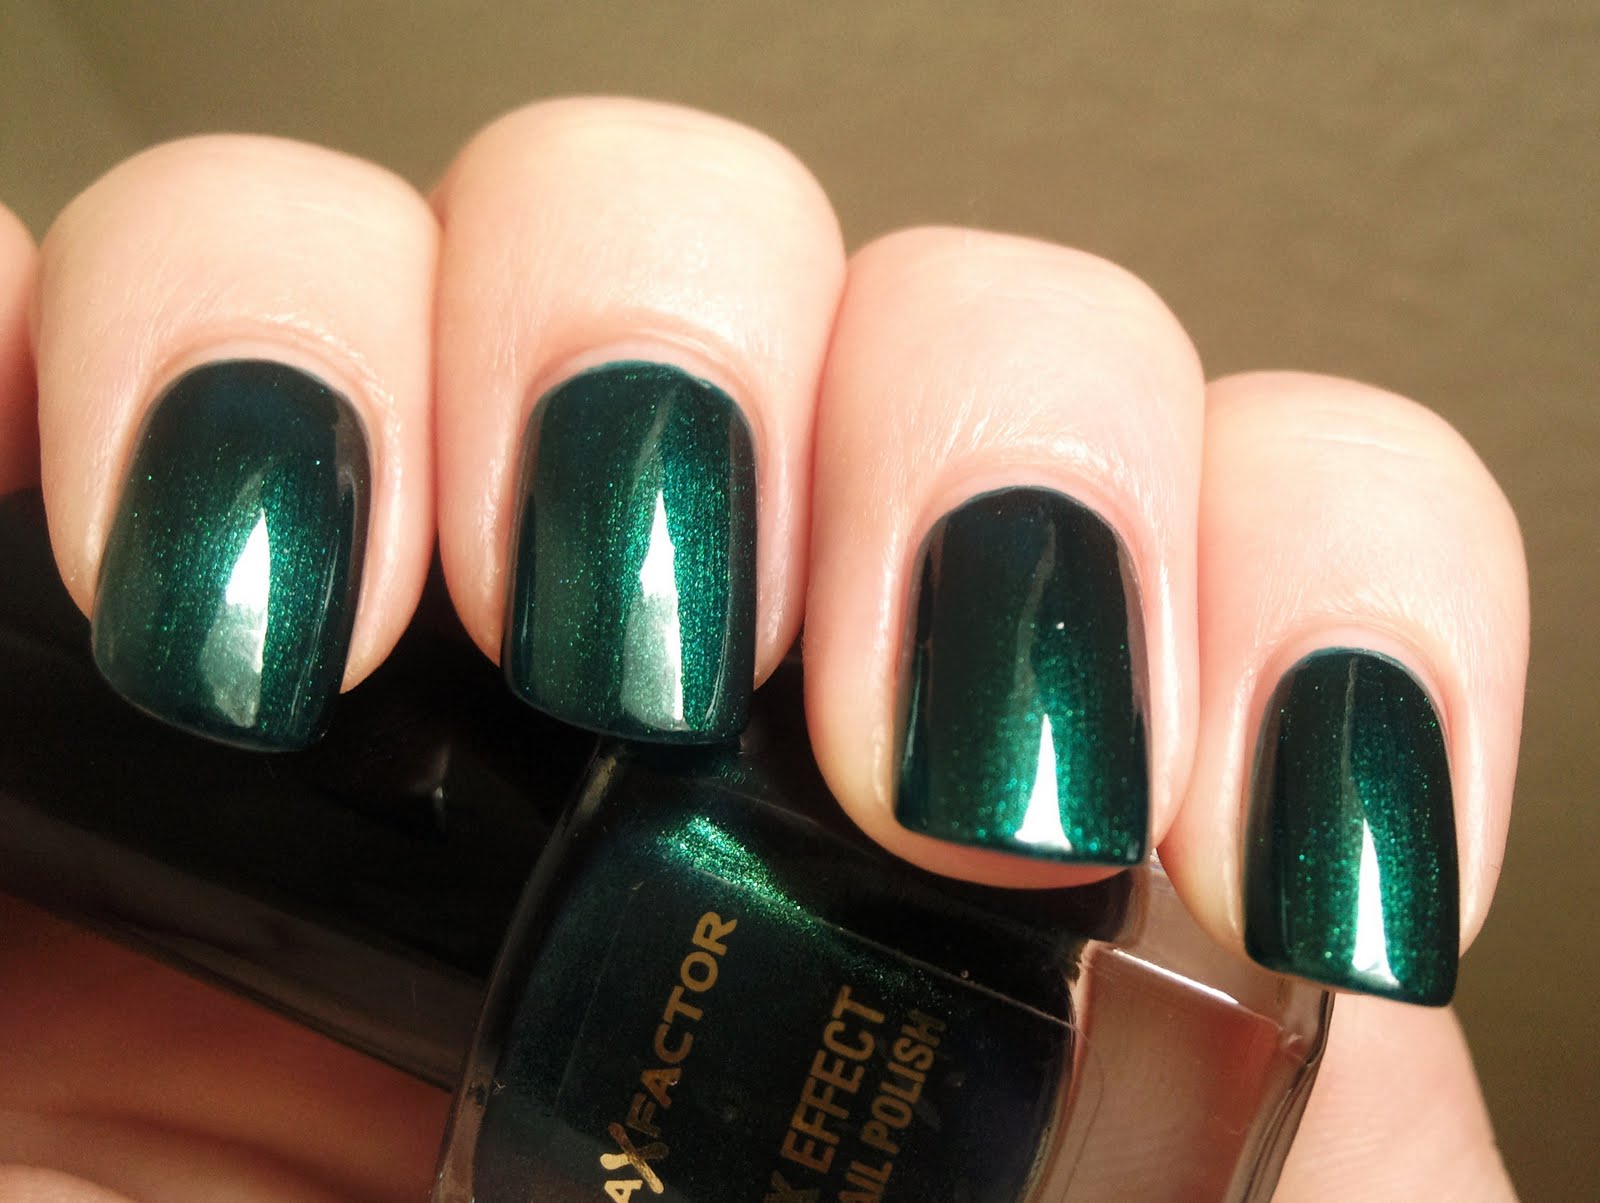 1. "Emerald Envy" nail polish by Essie - wide 3